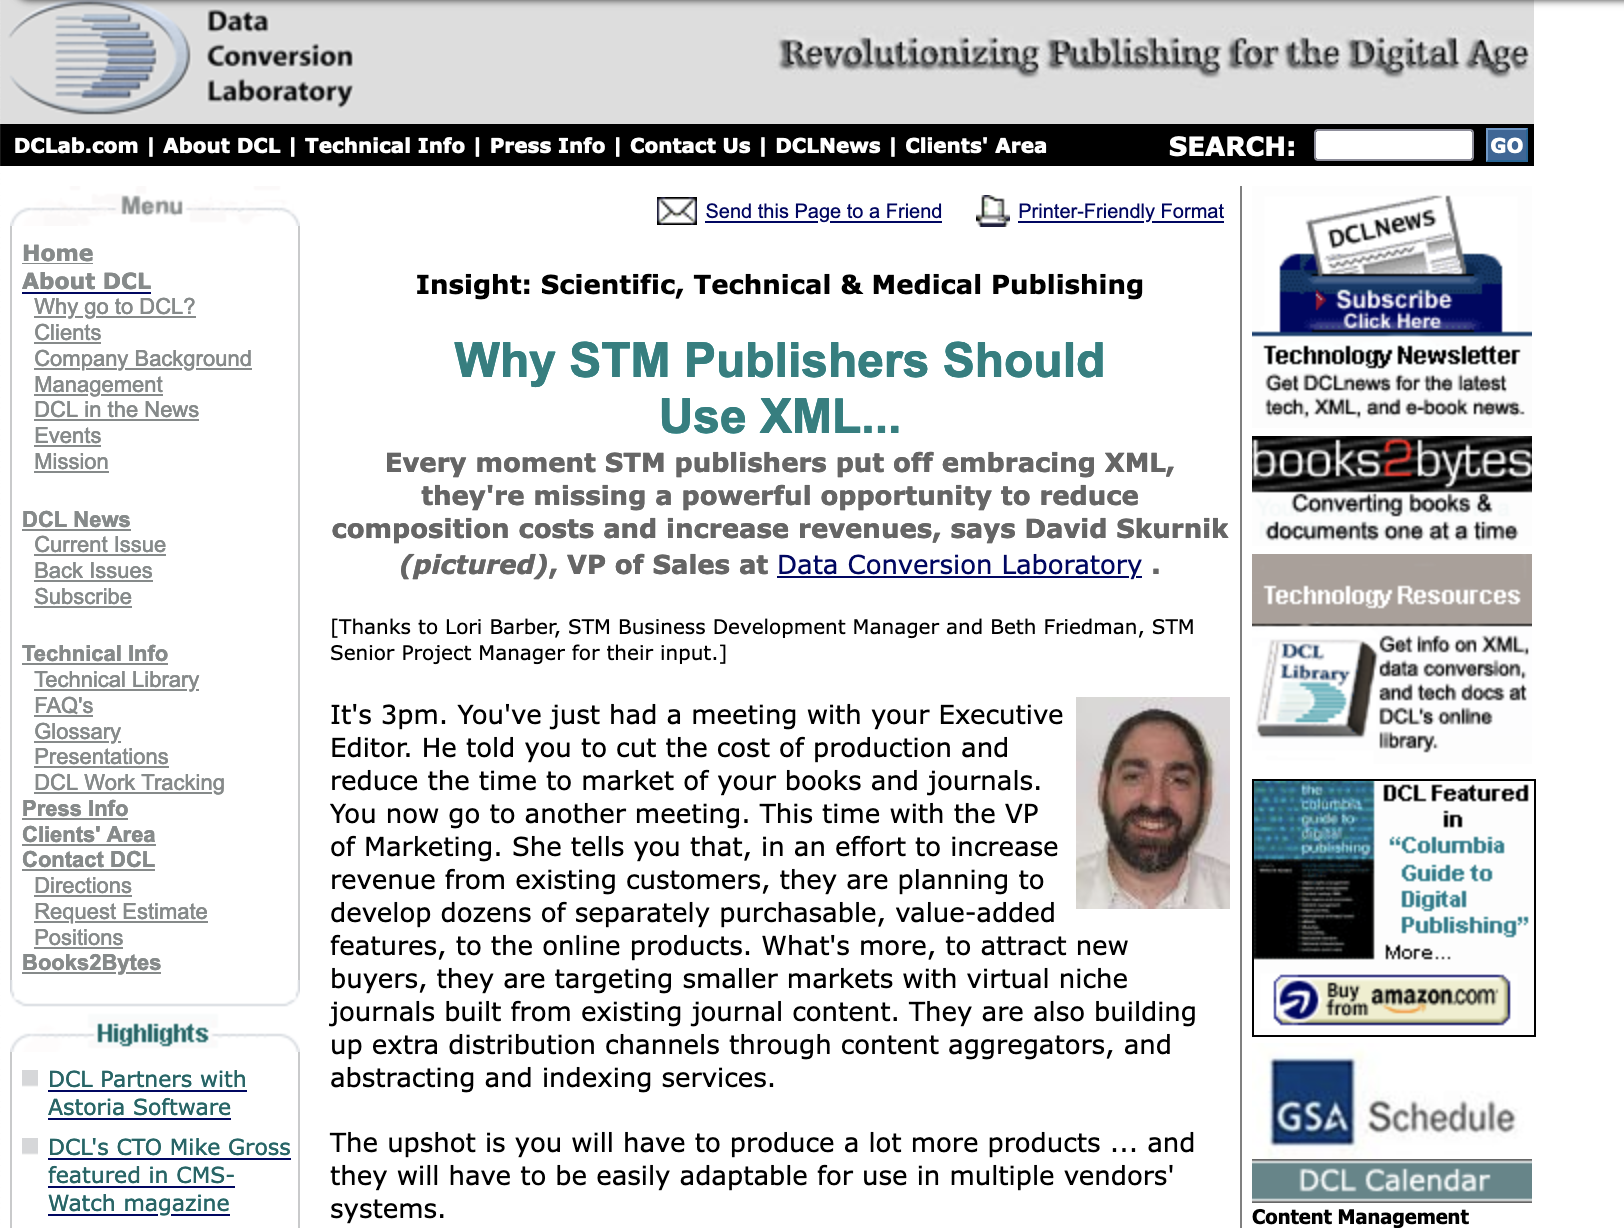 Why STM Publishers Should Use XML